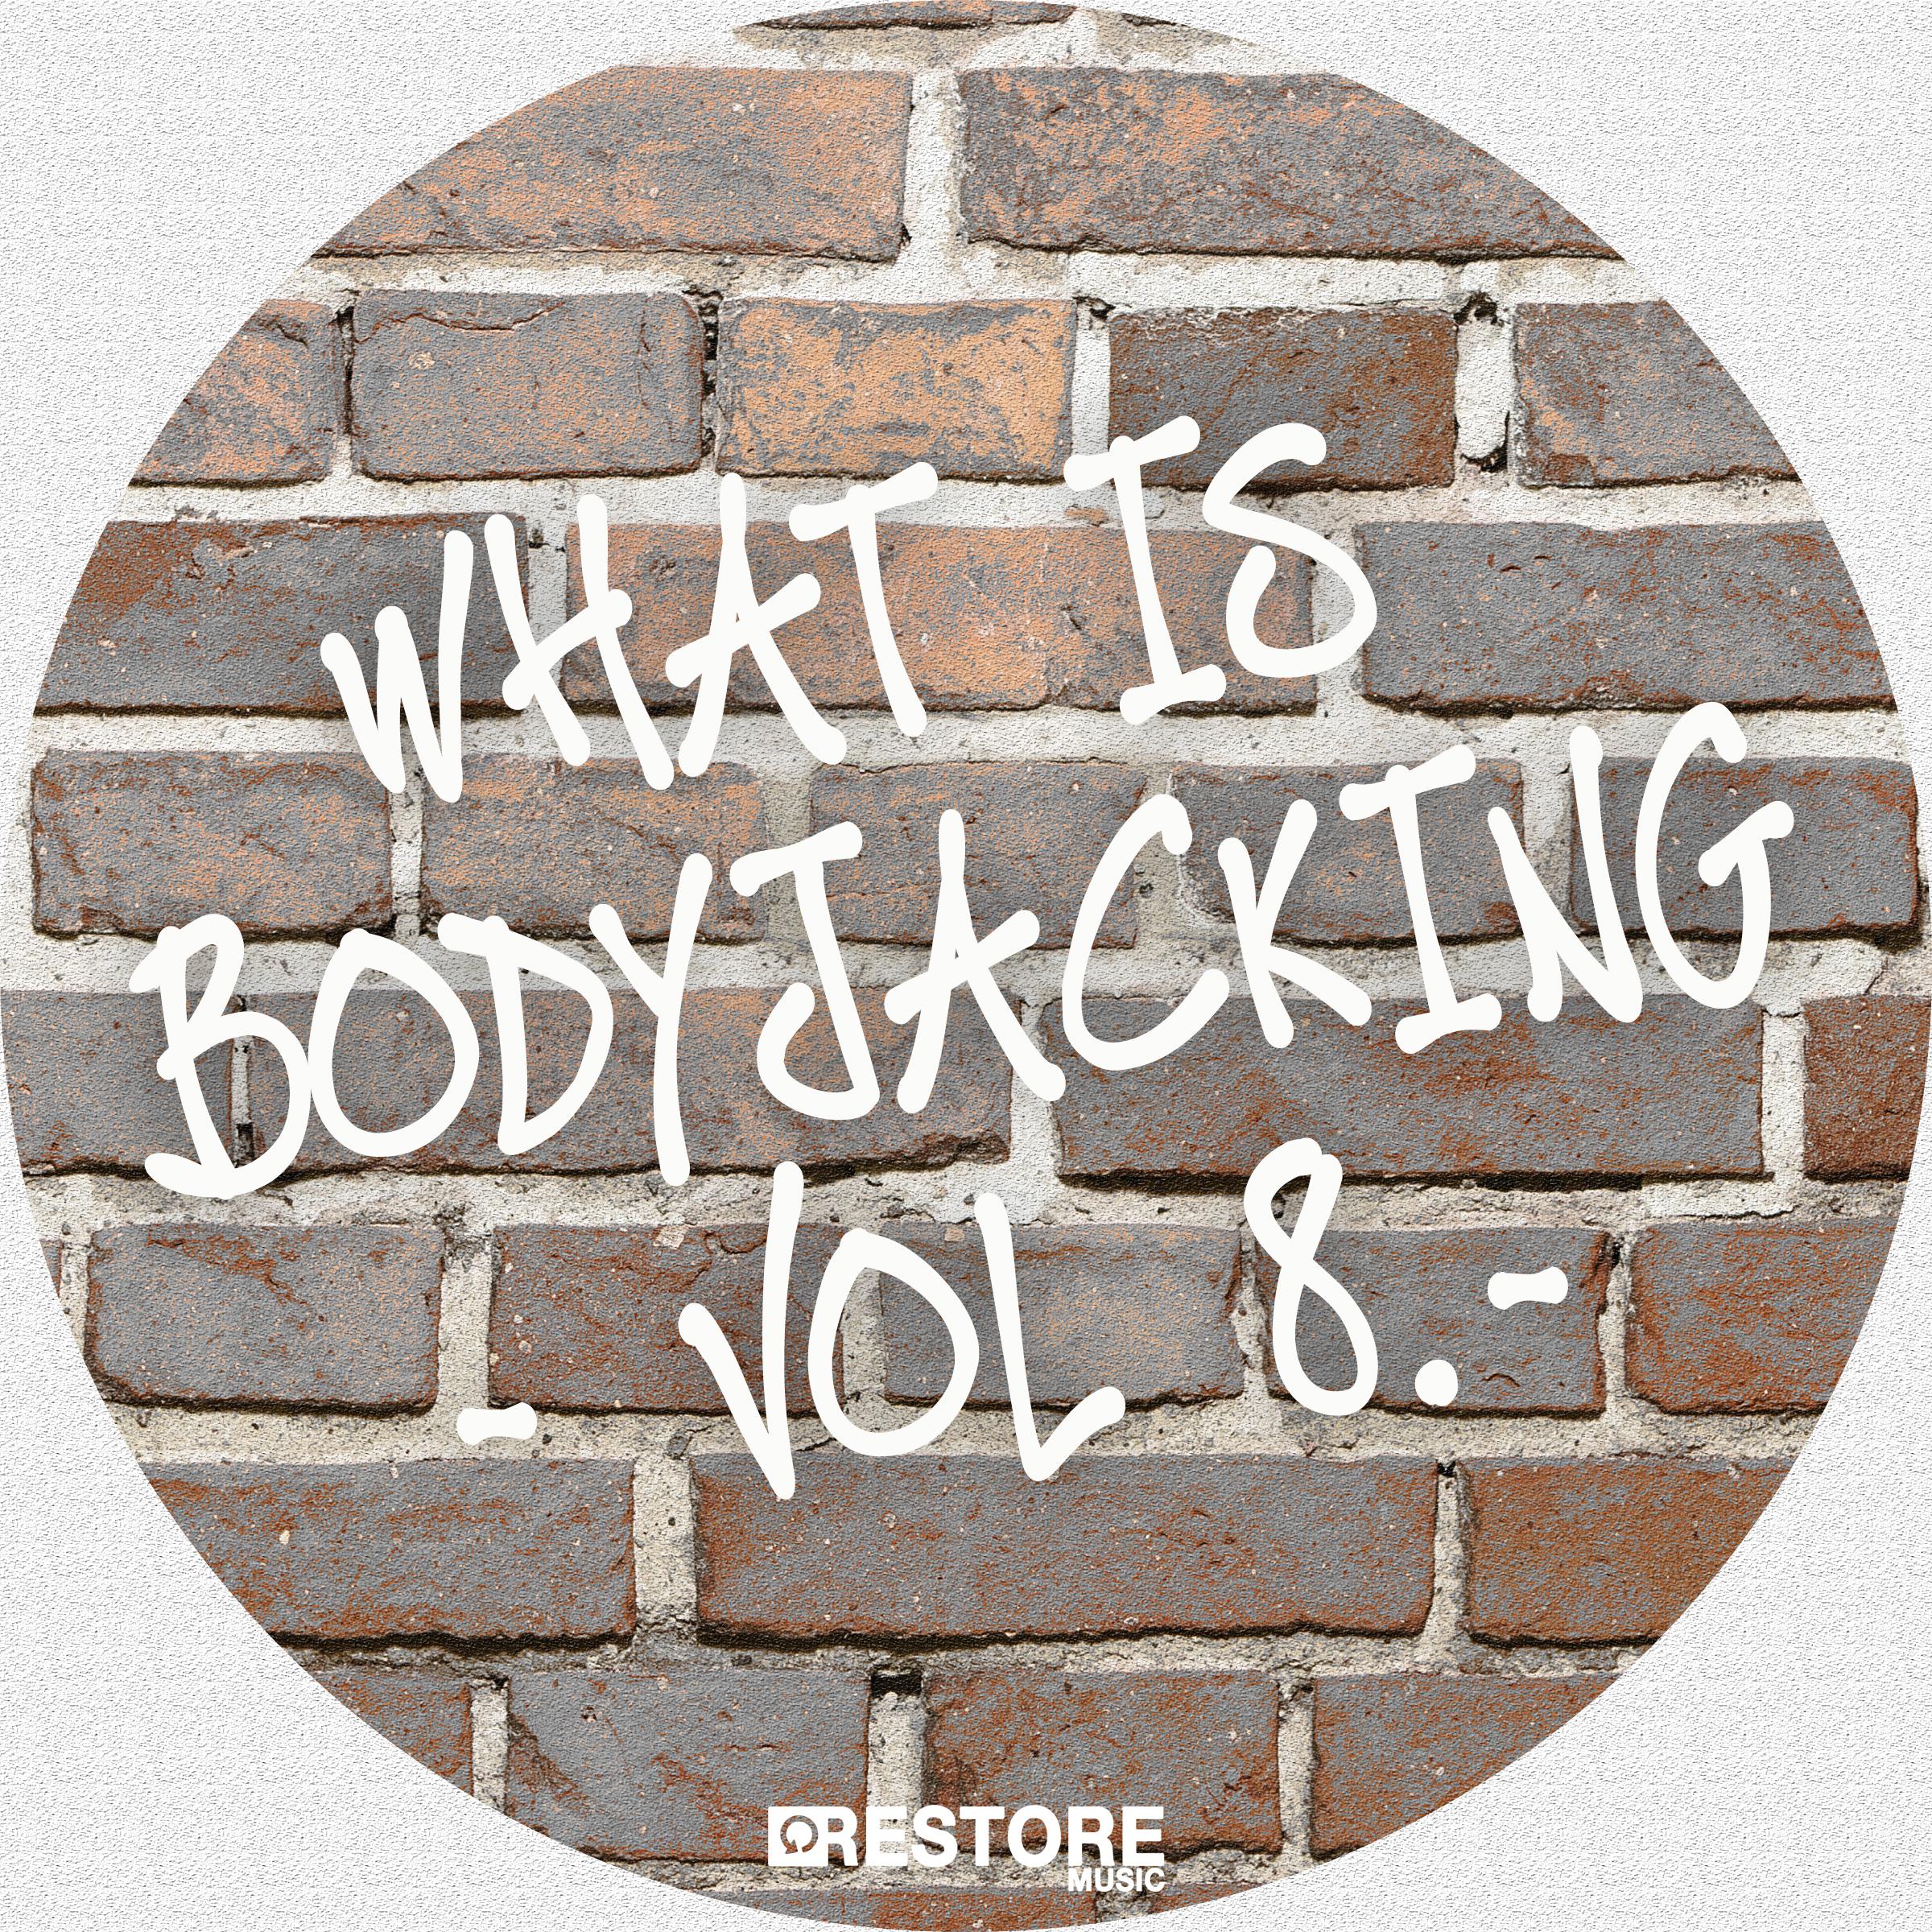 What Is Bodyjacking?, Vol. 8